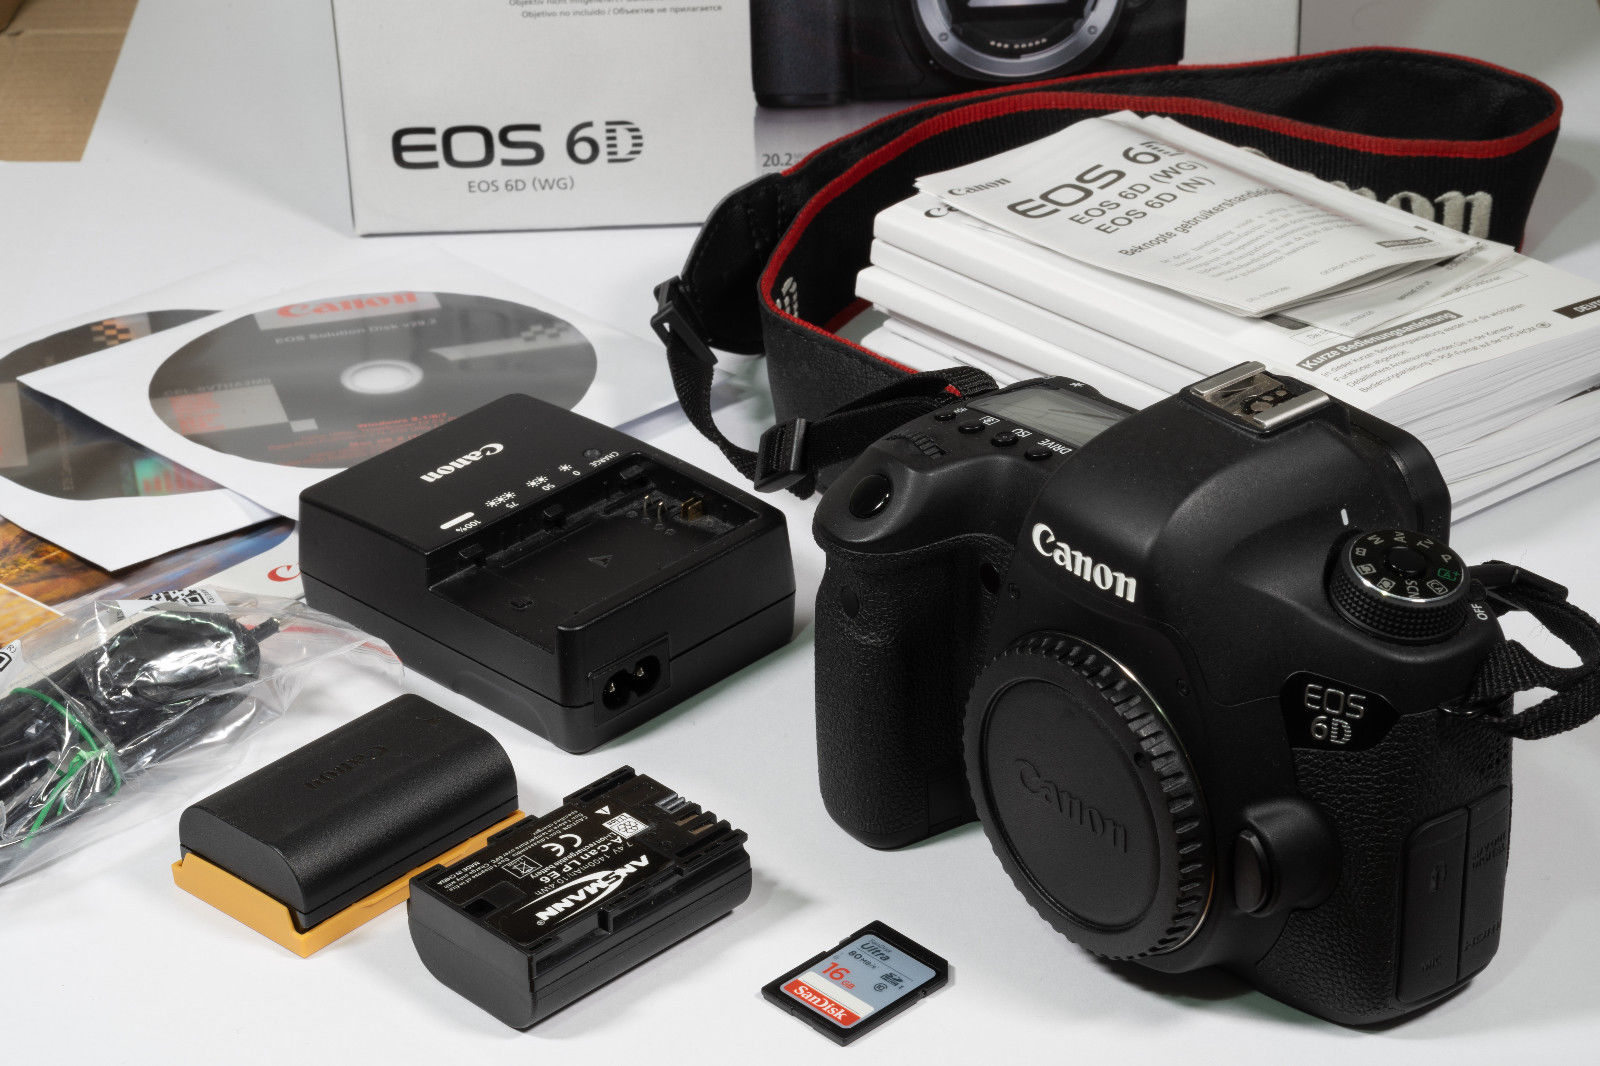 Canon EOS 6D (WG) 20,2 MP SLR-Digitalkamera - (Nur Gehäuse) 7500 Auslösungen